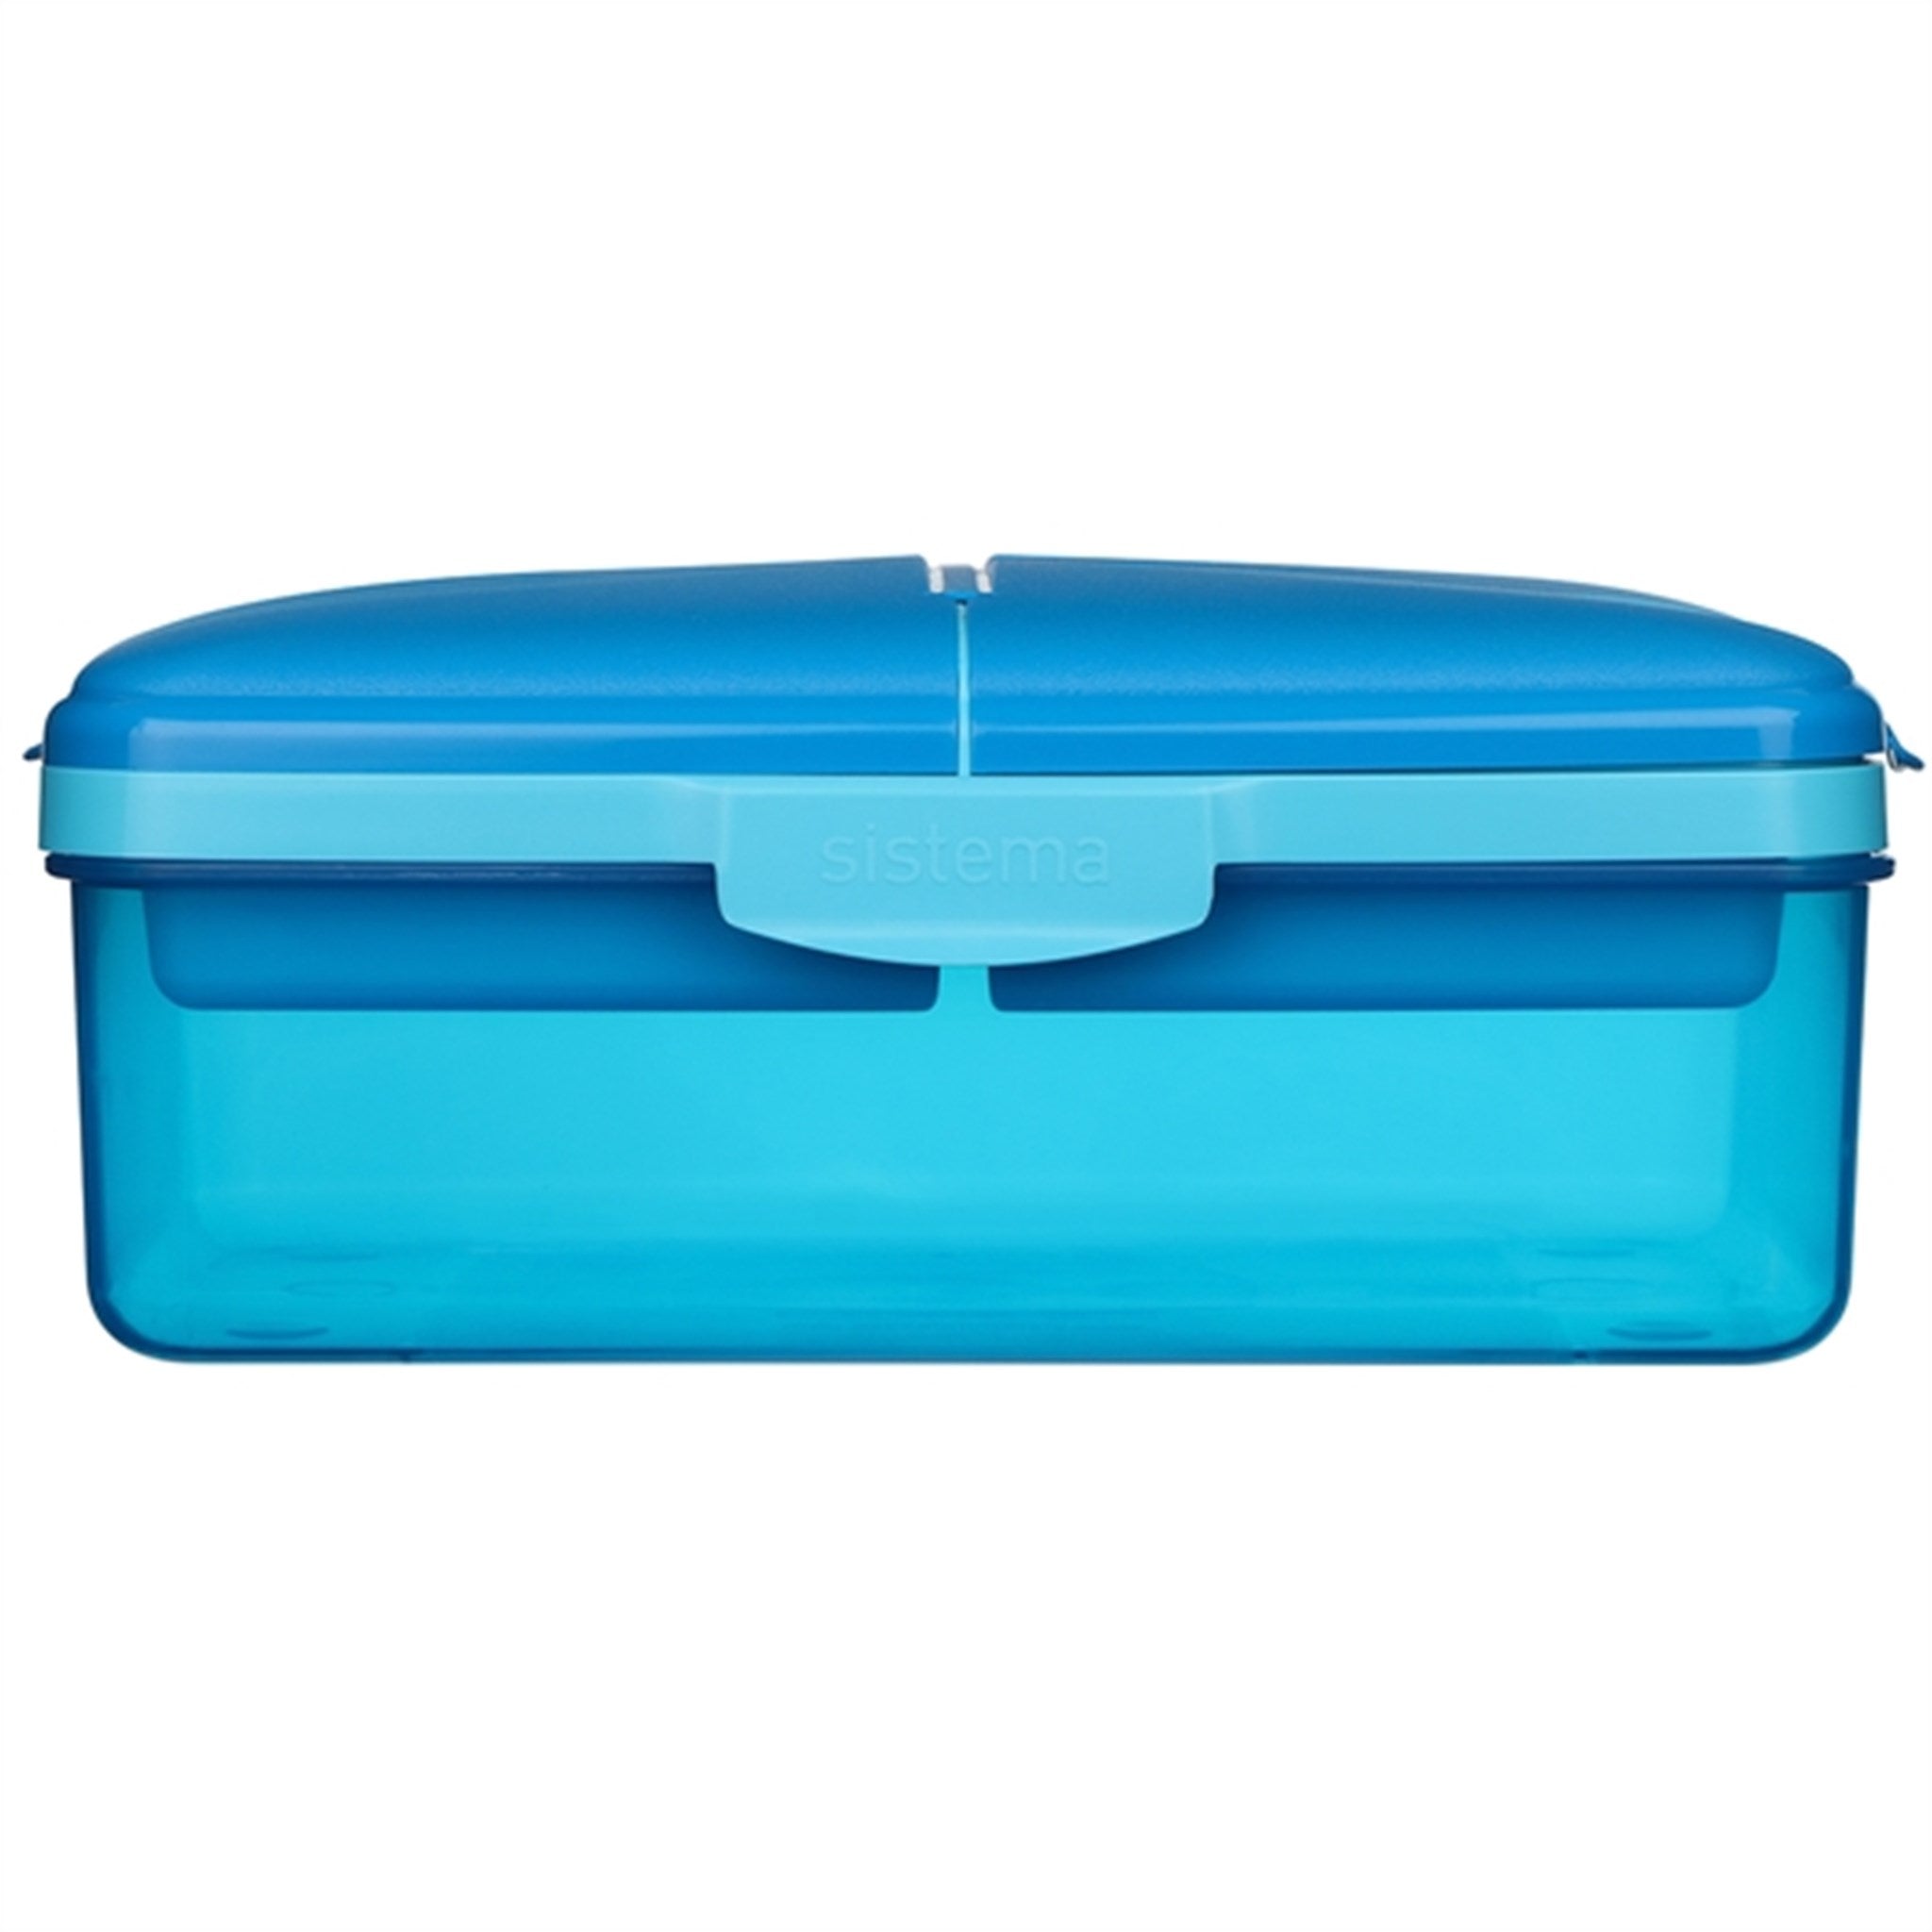 Sistema Slimline Quaddie Lunch Box 1,5 L Blue 2